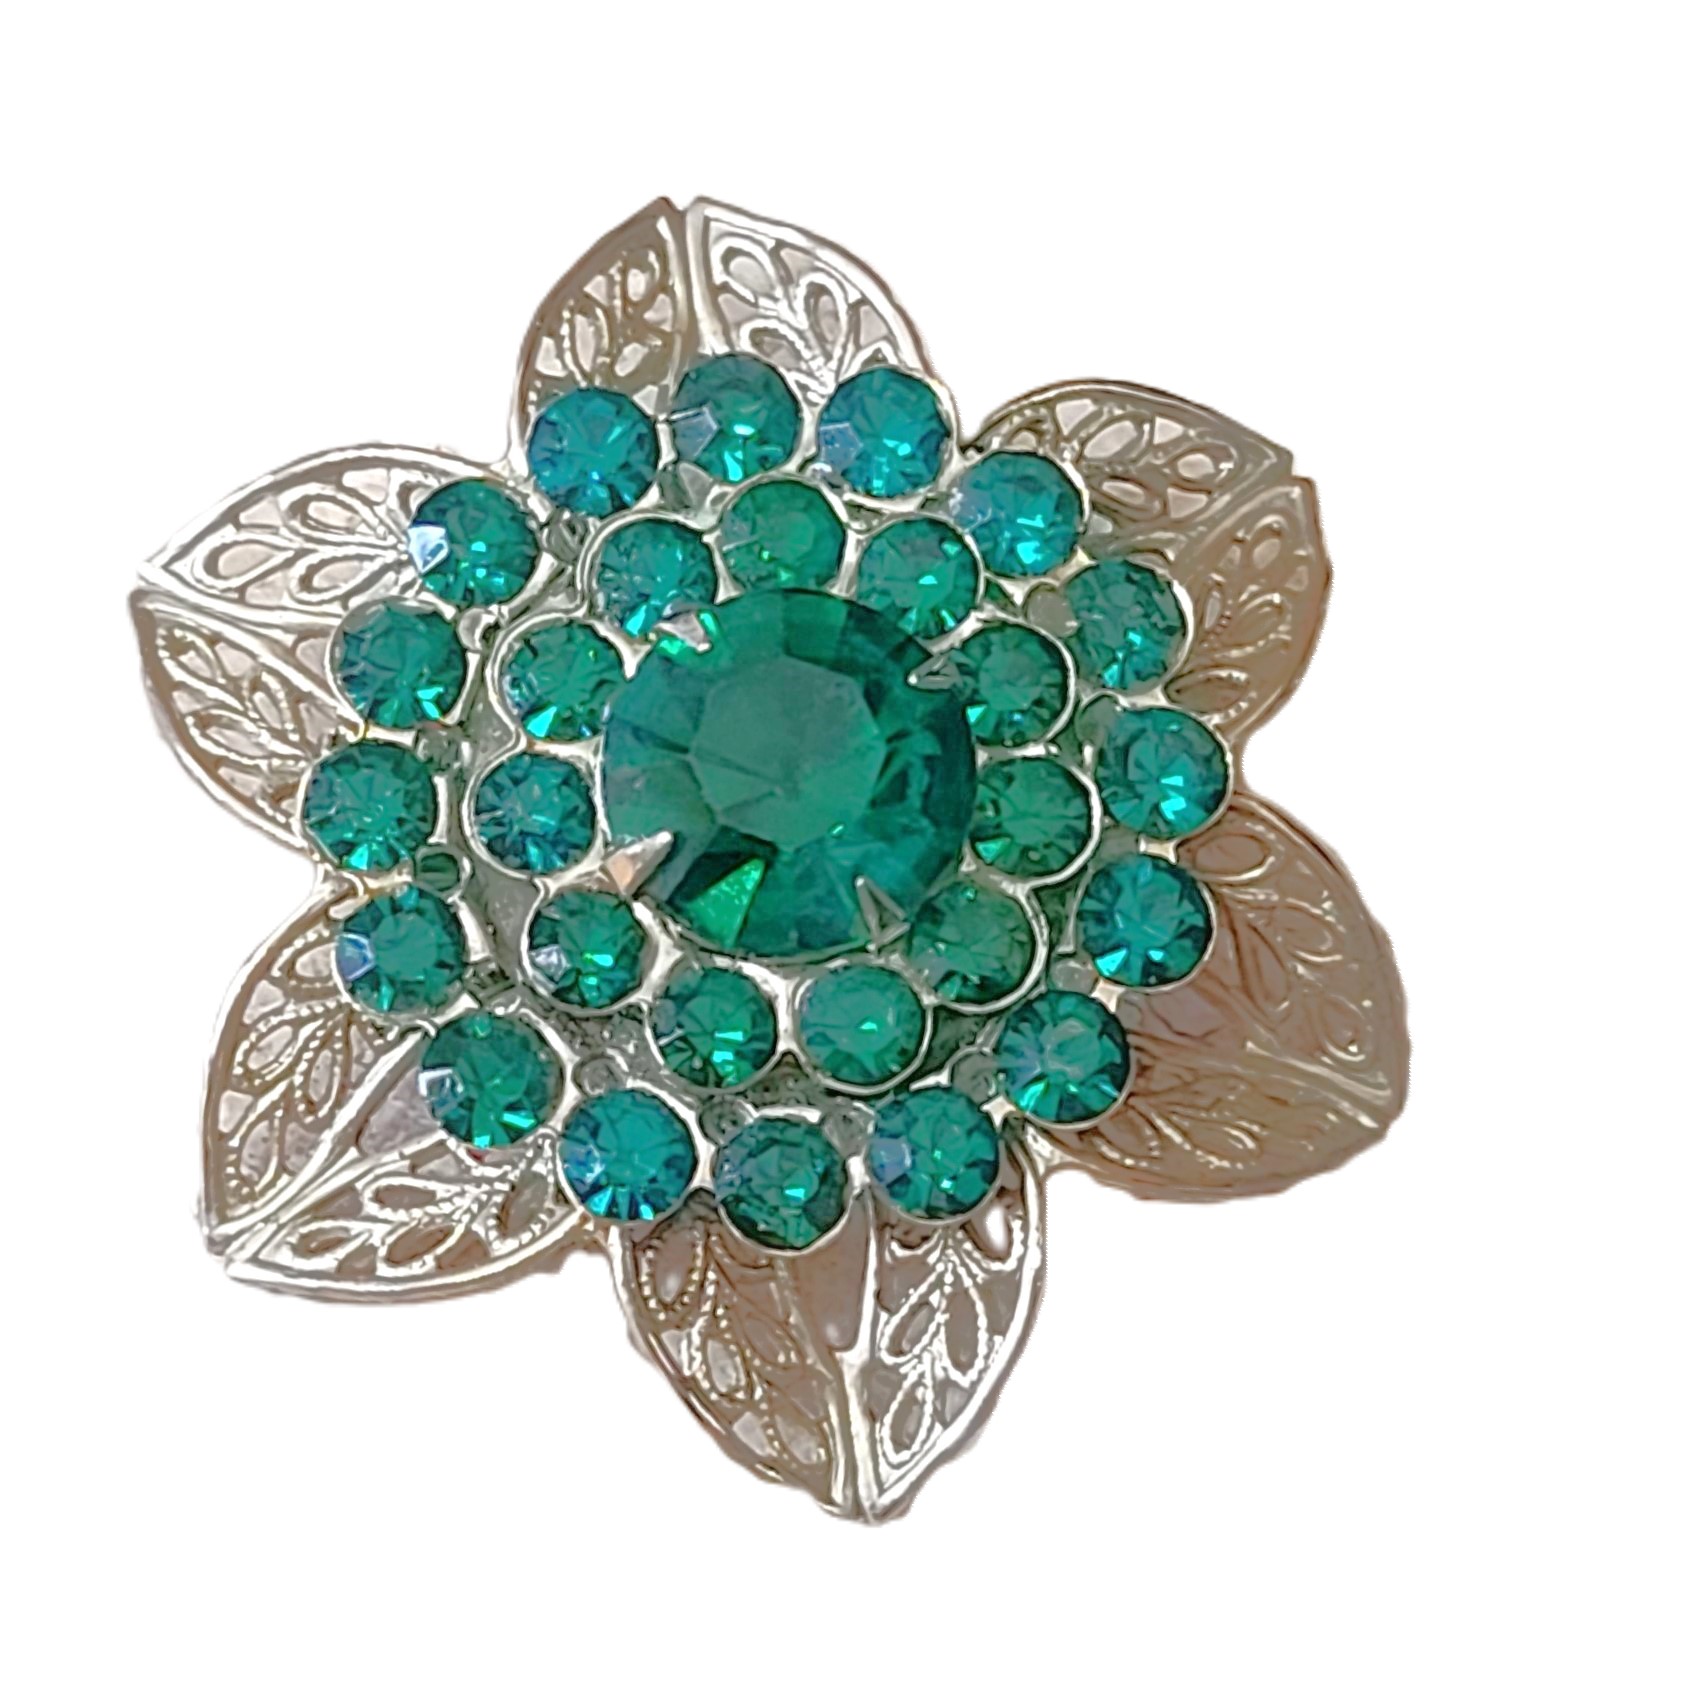 Green rhinestone pin, vintage pin with green rhinestones flower desgin and filigree detail